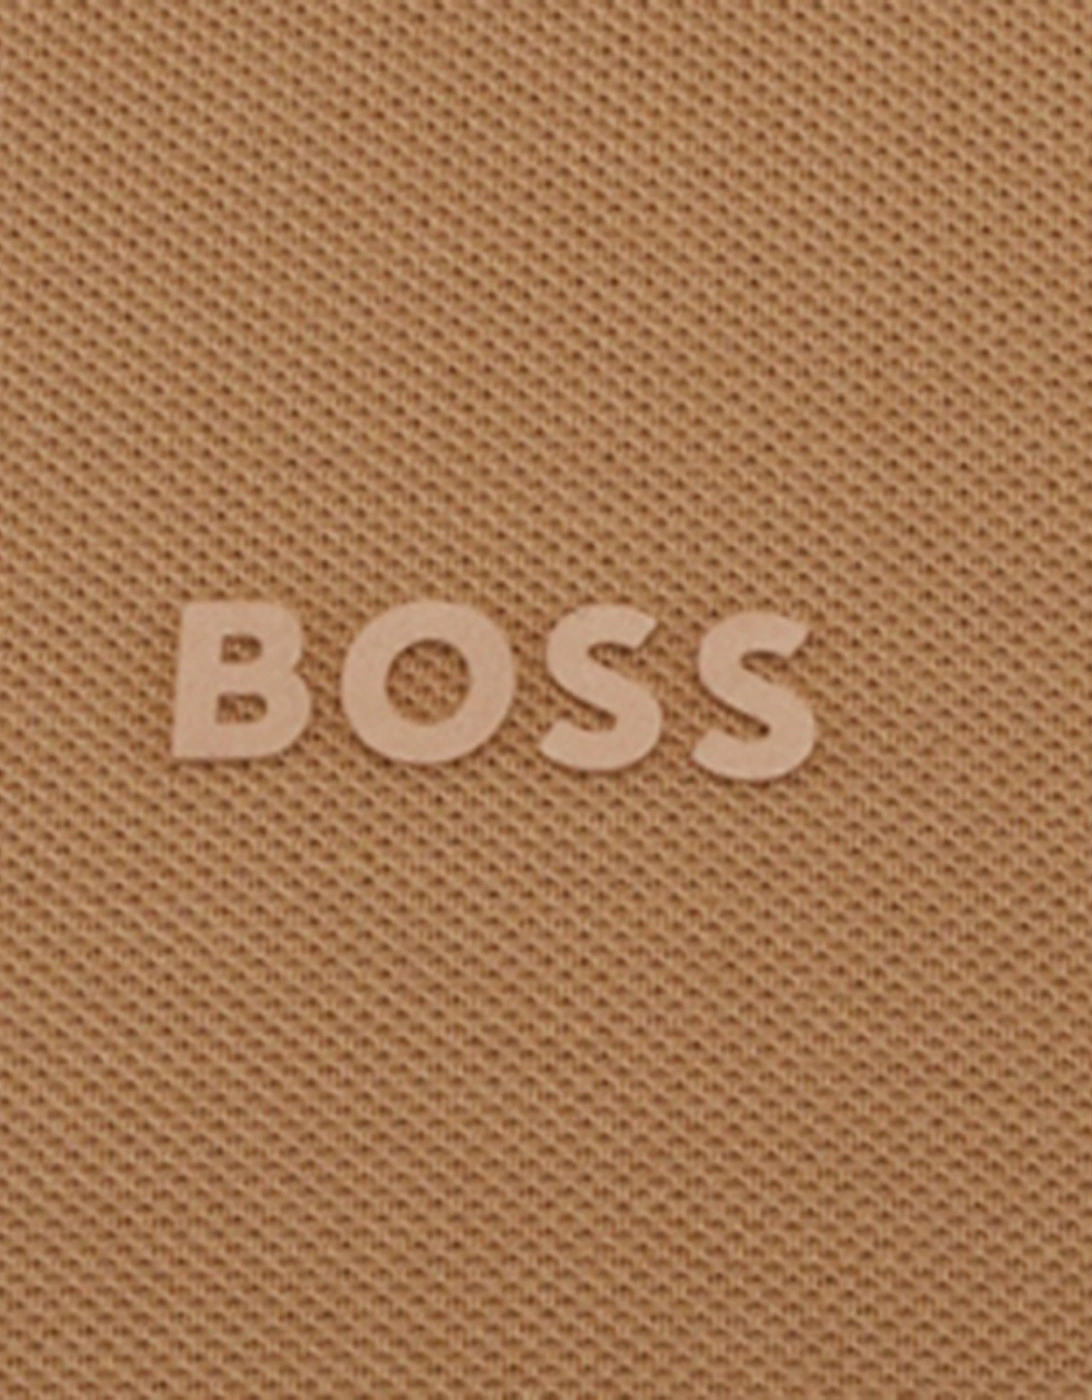 Boss Mens Parlay 190 Polo Shirt (Camel)